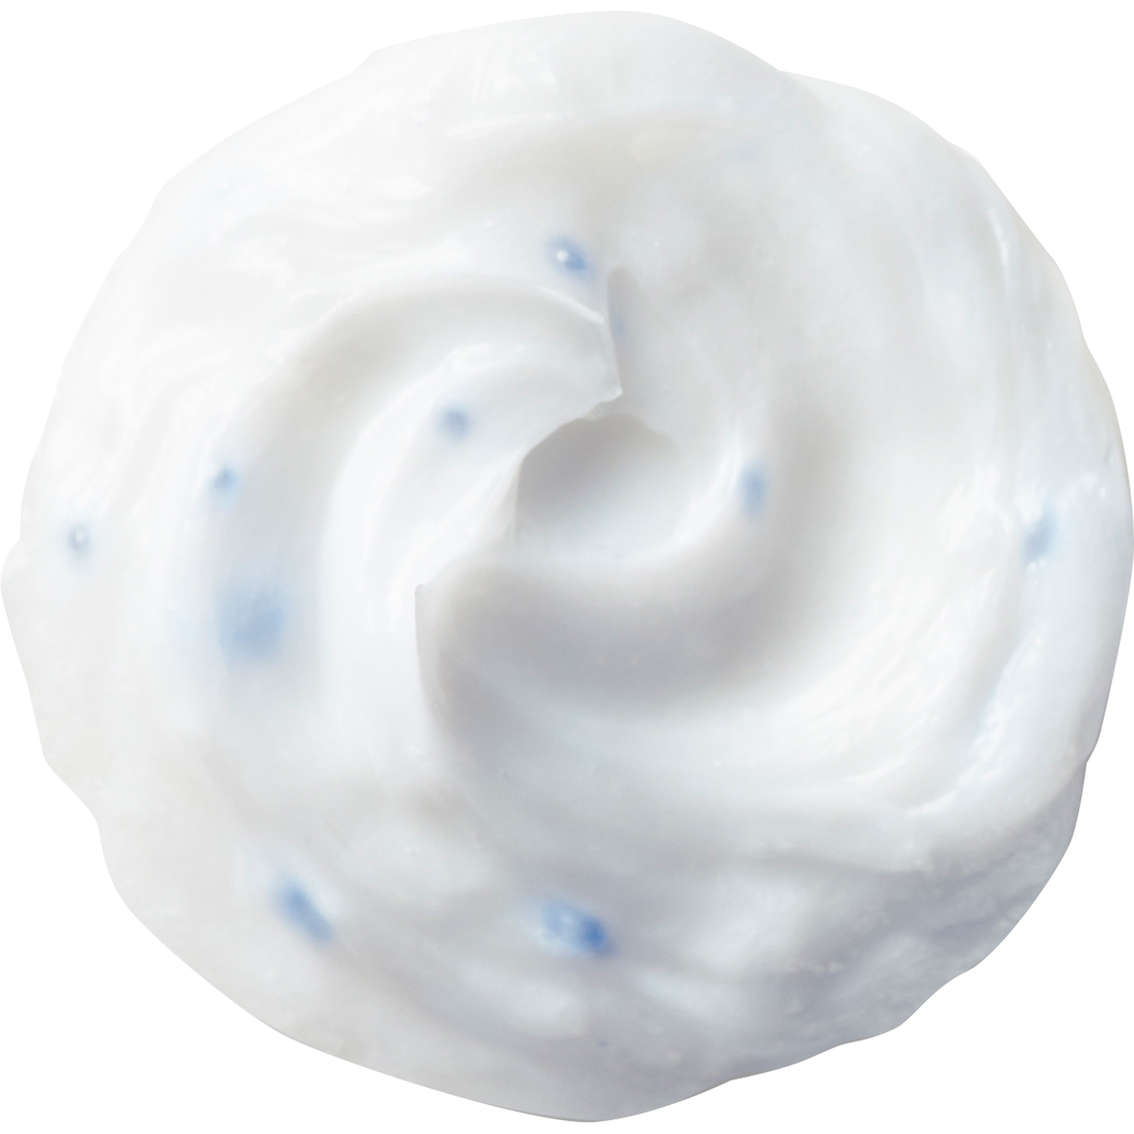 Shiseido Deep Cleansing Foam - Image 4 of 6